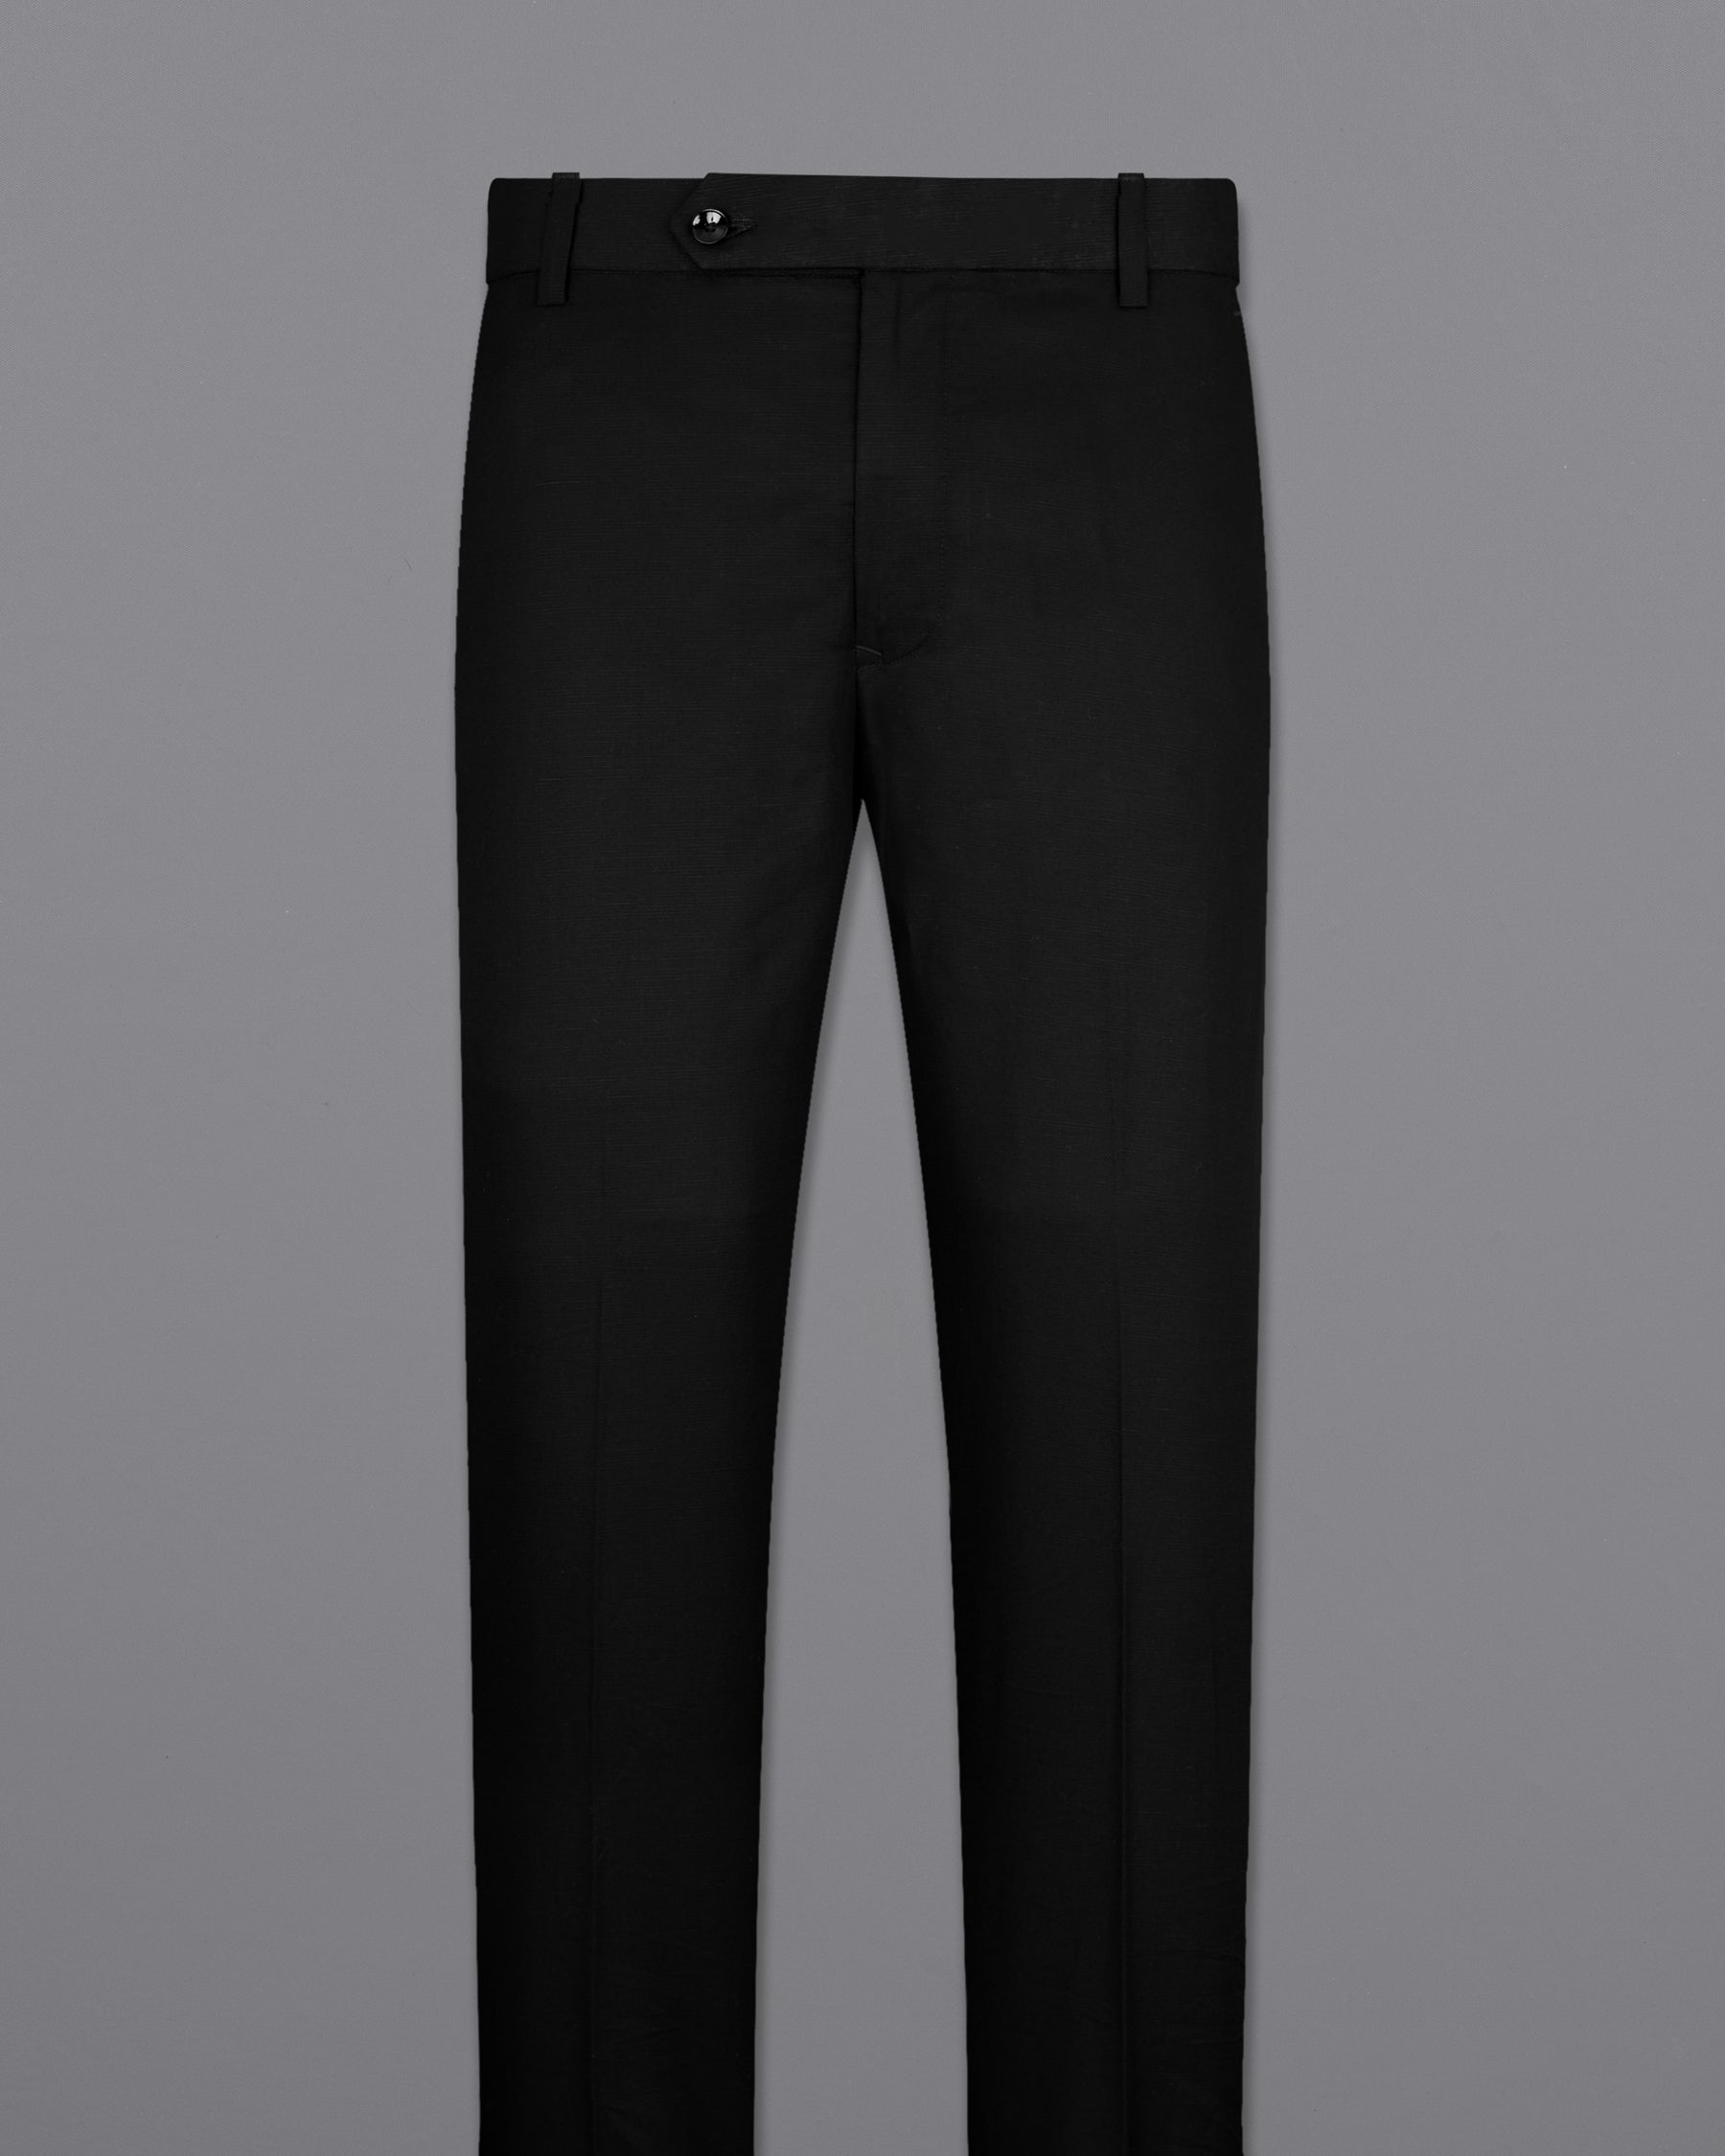 COD Black Men's Black Office Pants Slim Fit Stretchable Pants Skinny Jeans  | Shopee Philippines